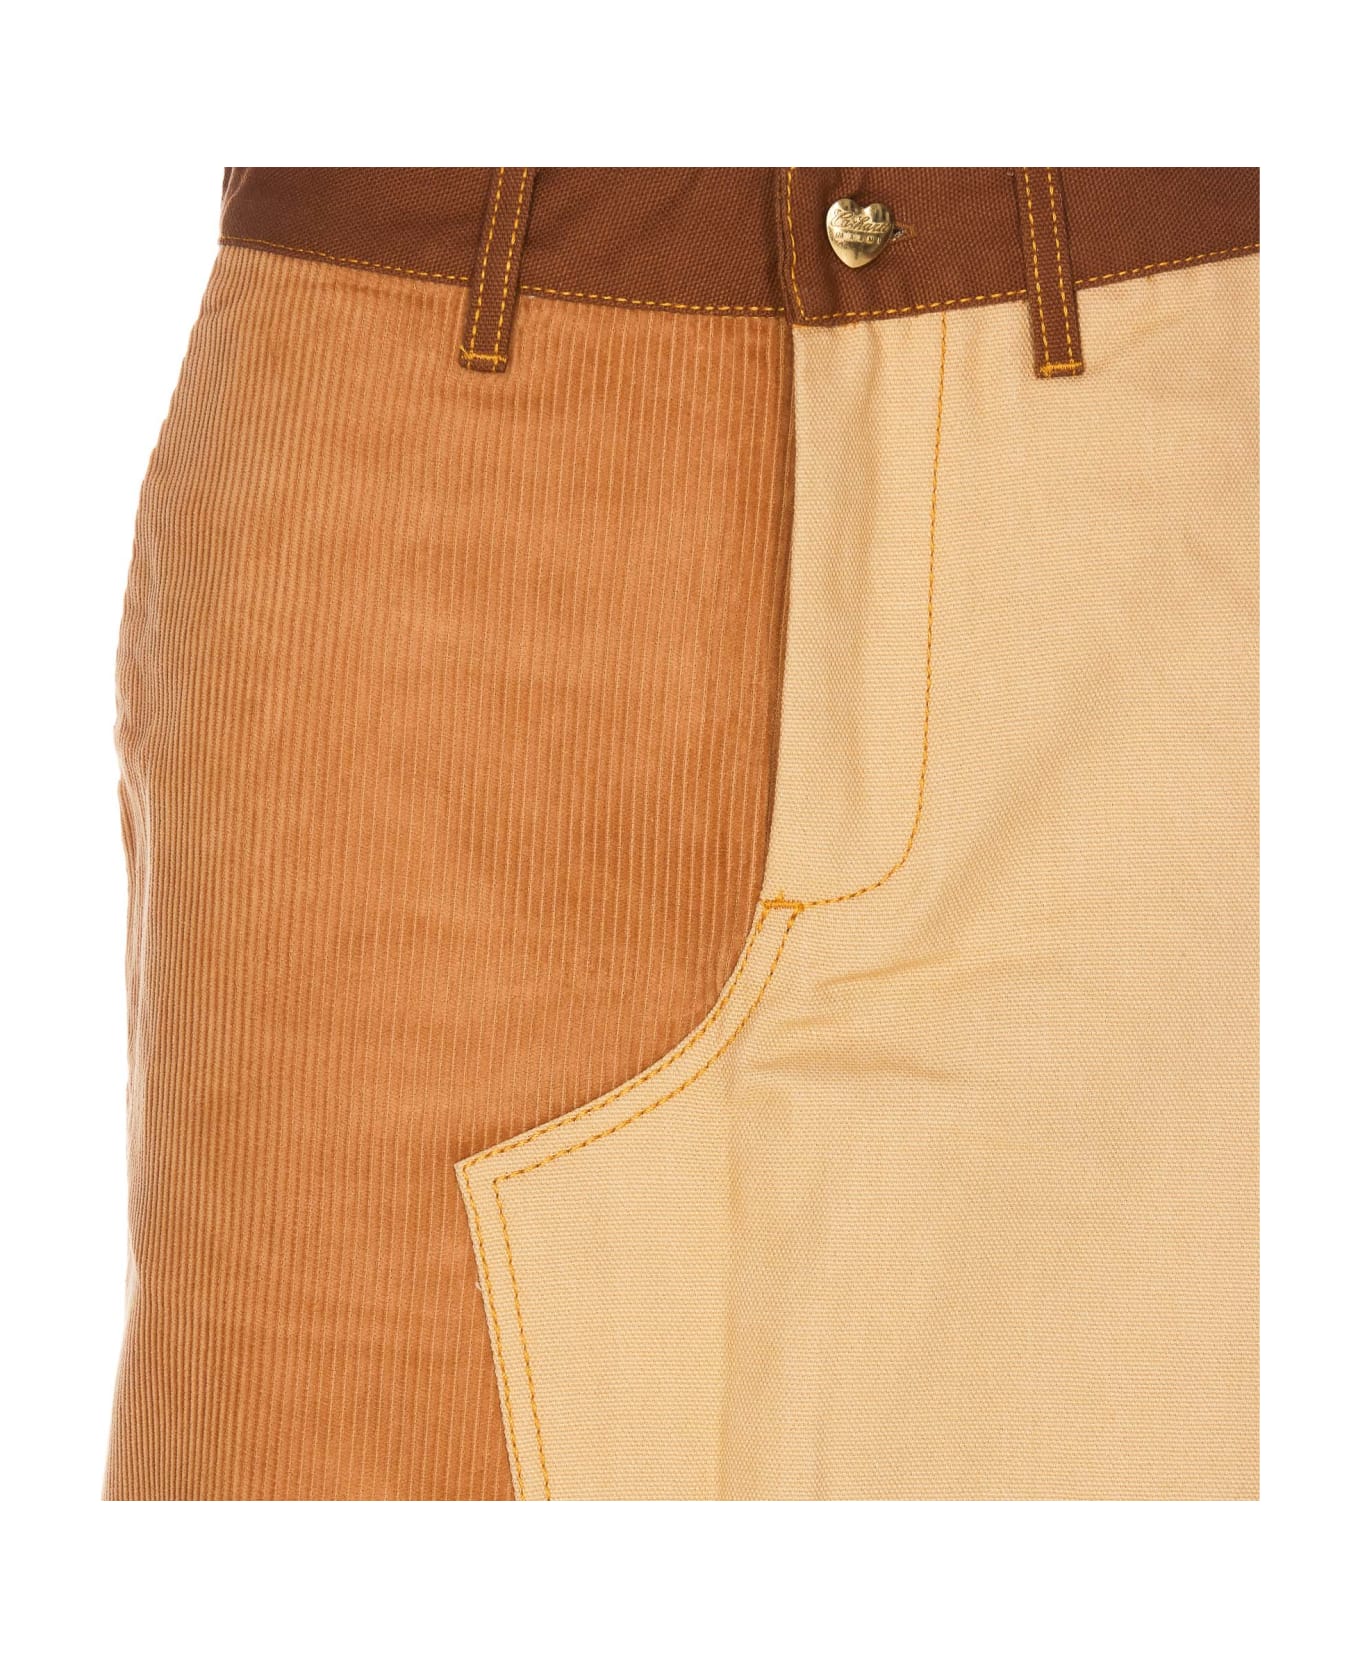 Marni X Carhartt Color Block Midi Skirt - Multicolor